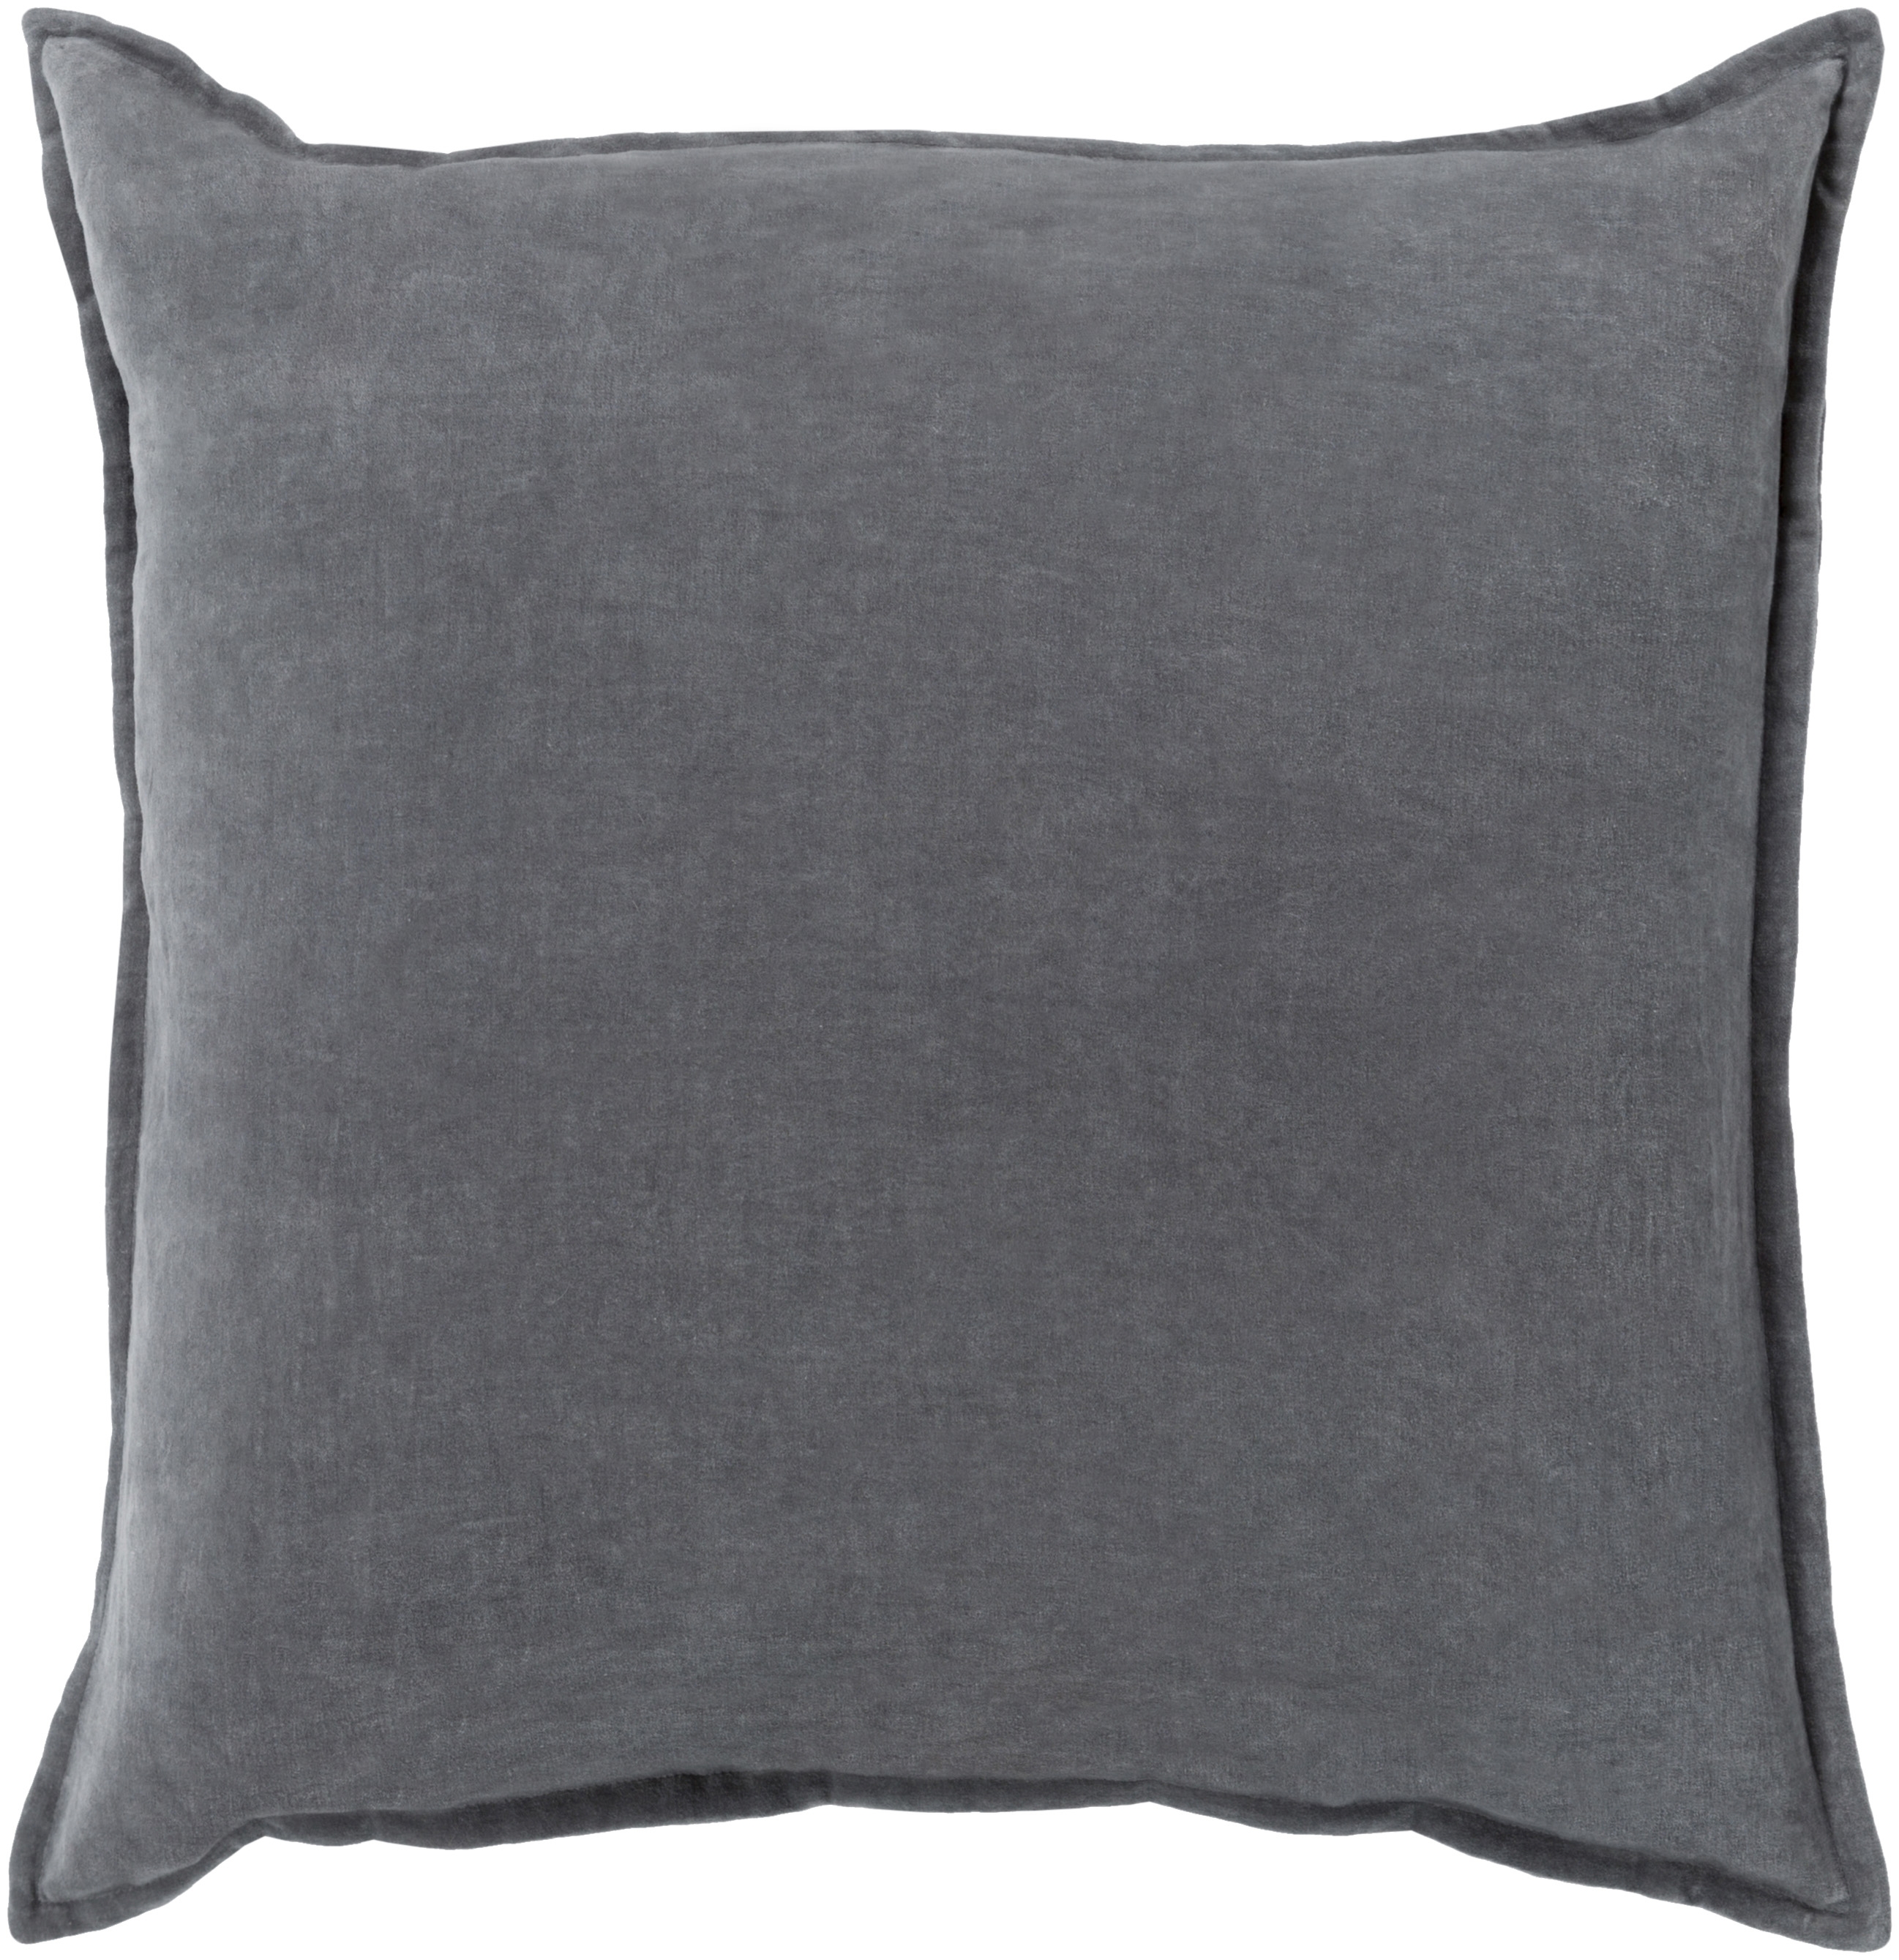 Cotton Velvet Throw Pillow, 22" x 22", pillow cover only - Image 0